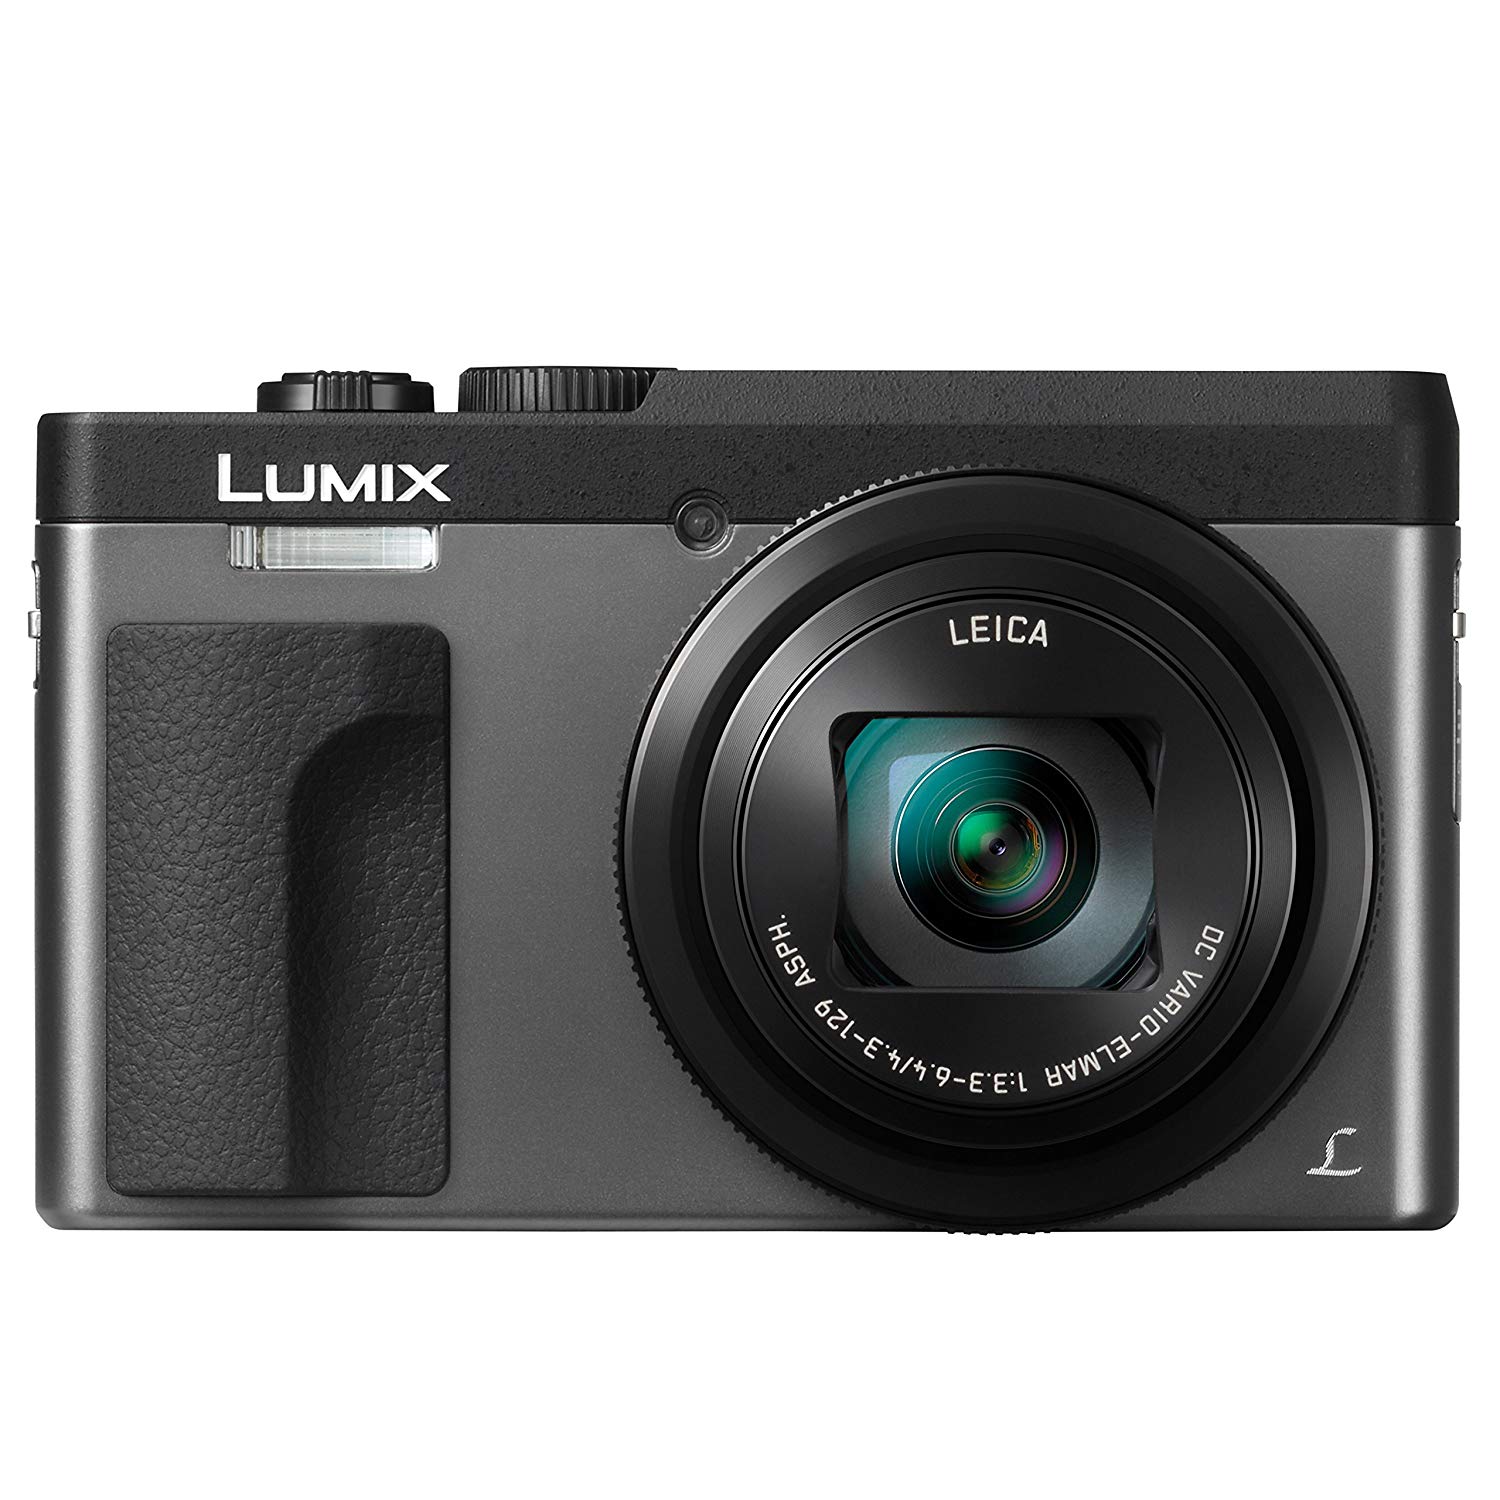 A Panasonic Lumix DC-ZS70S camera